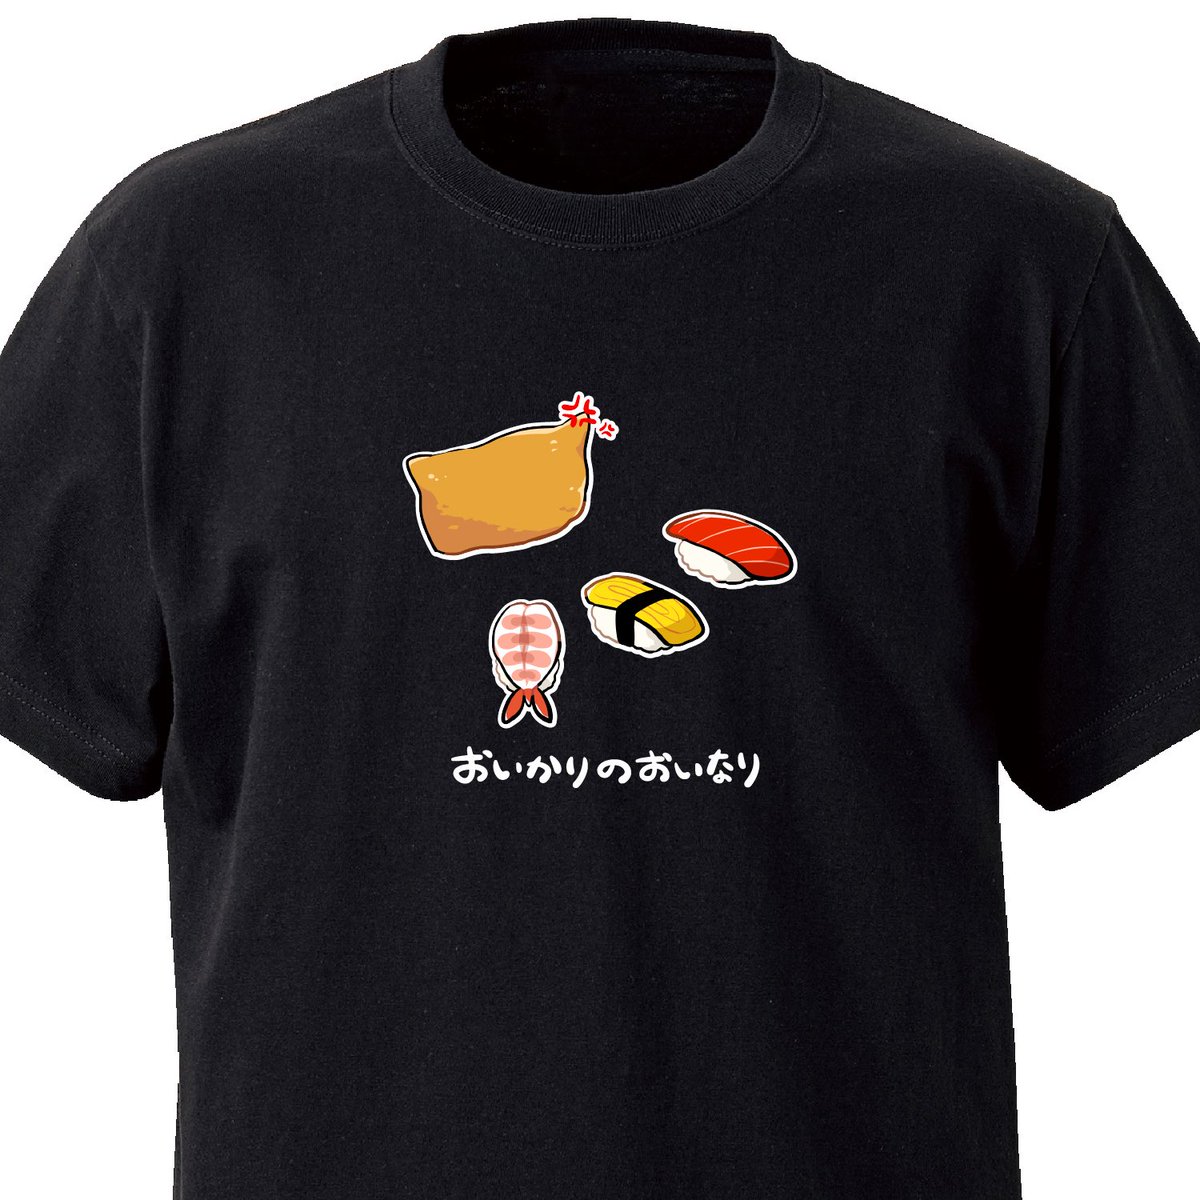 sushi food shirt simple background white background shrimp food focus  illustration images